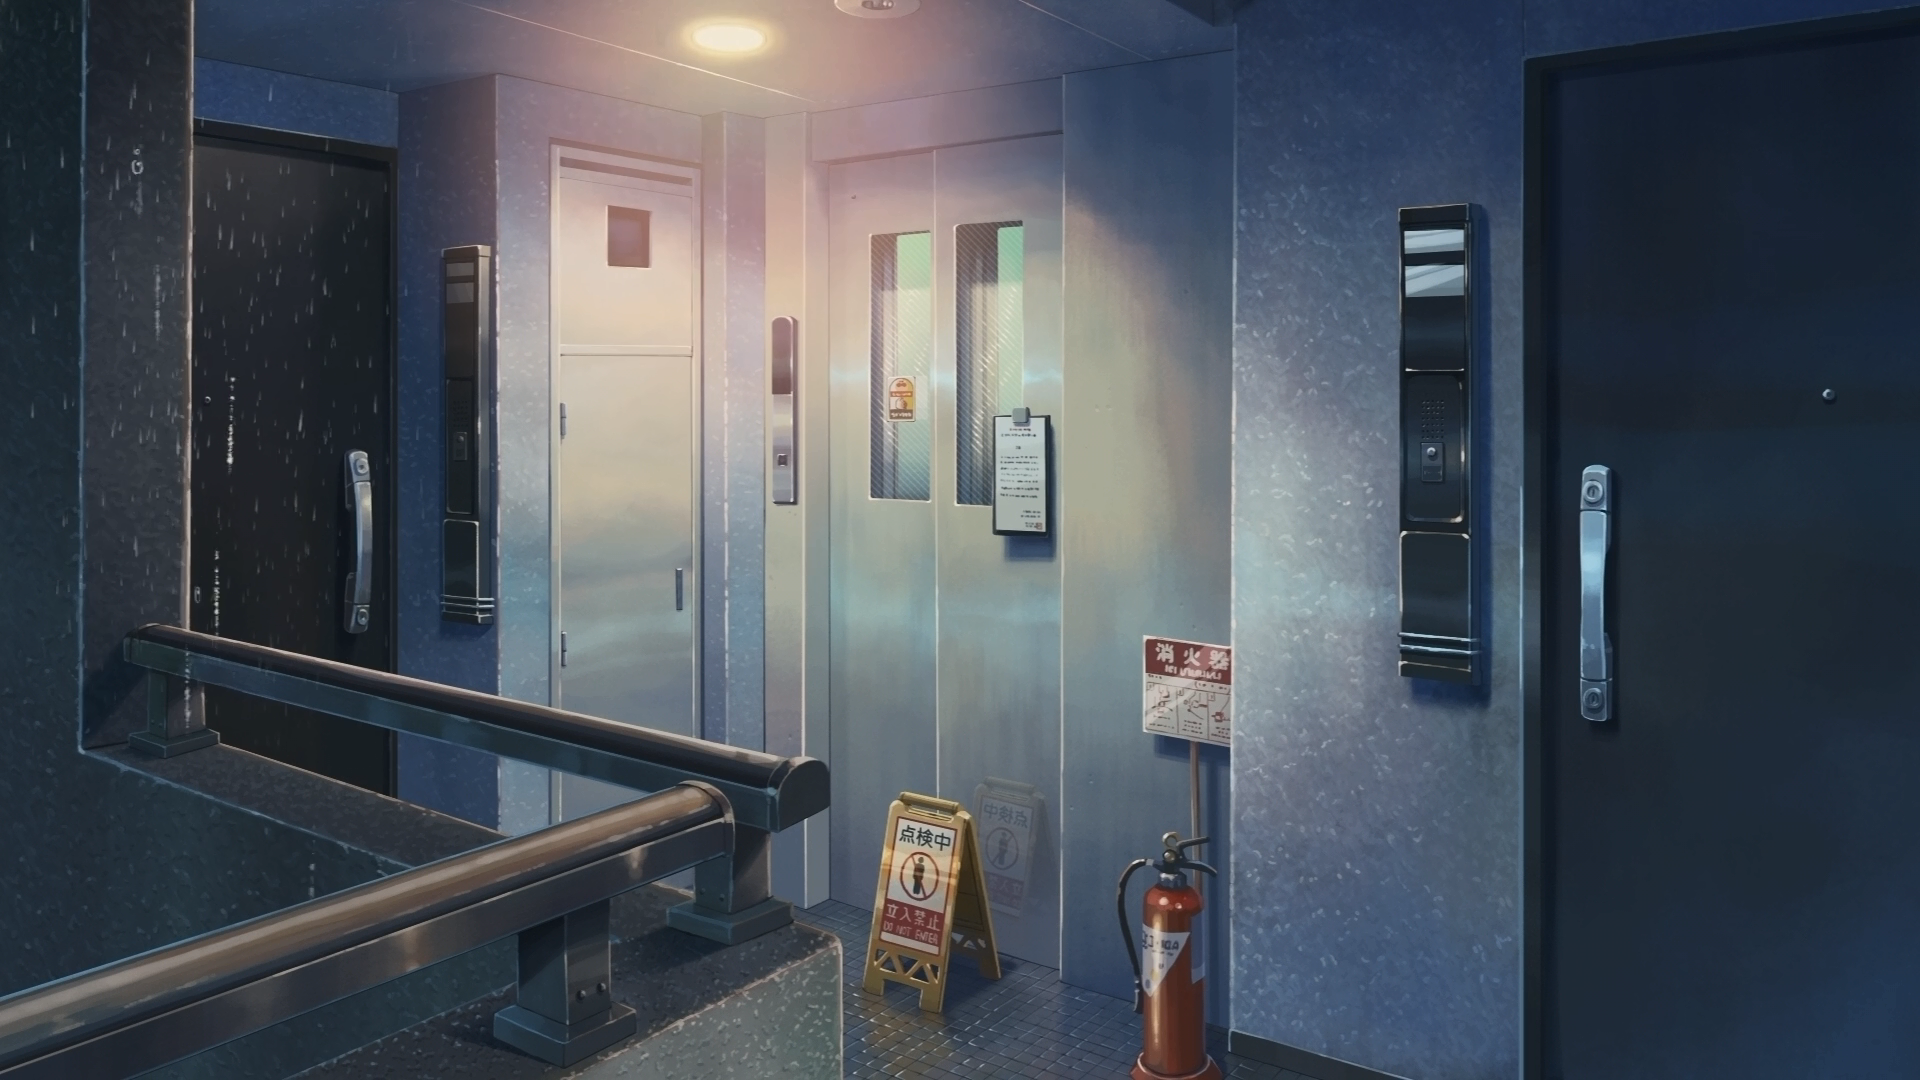 Anime 1920x1080 The Garden of Words anime sign indoors Makoto Shinkai  fire extinguishers door elevator